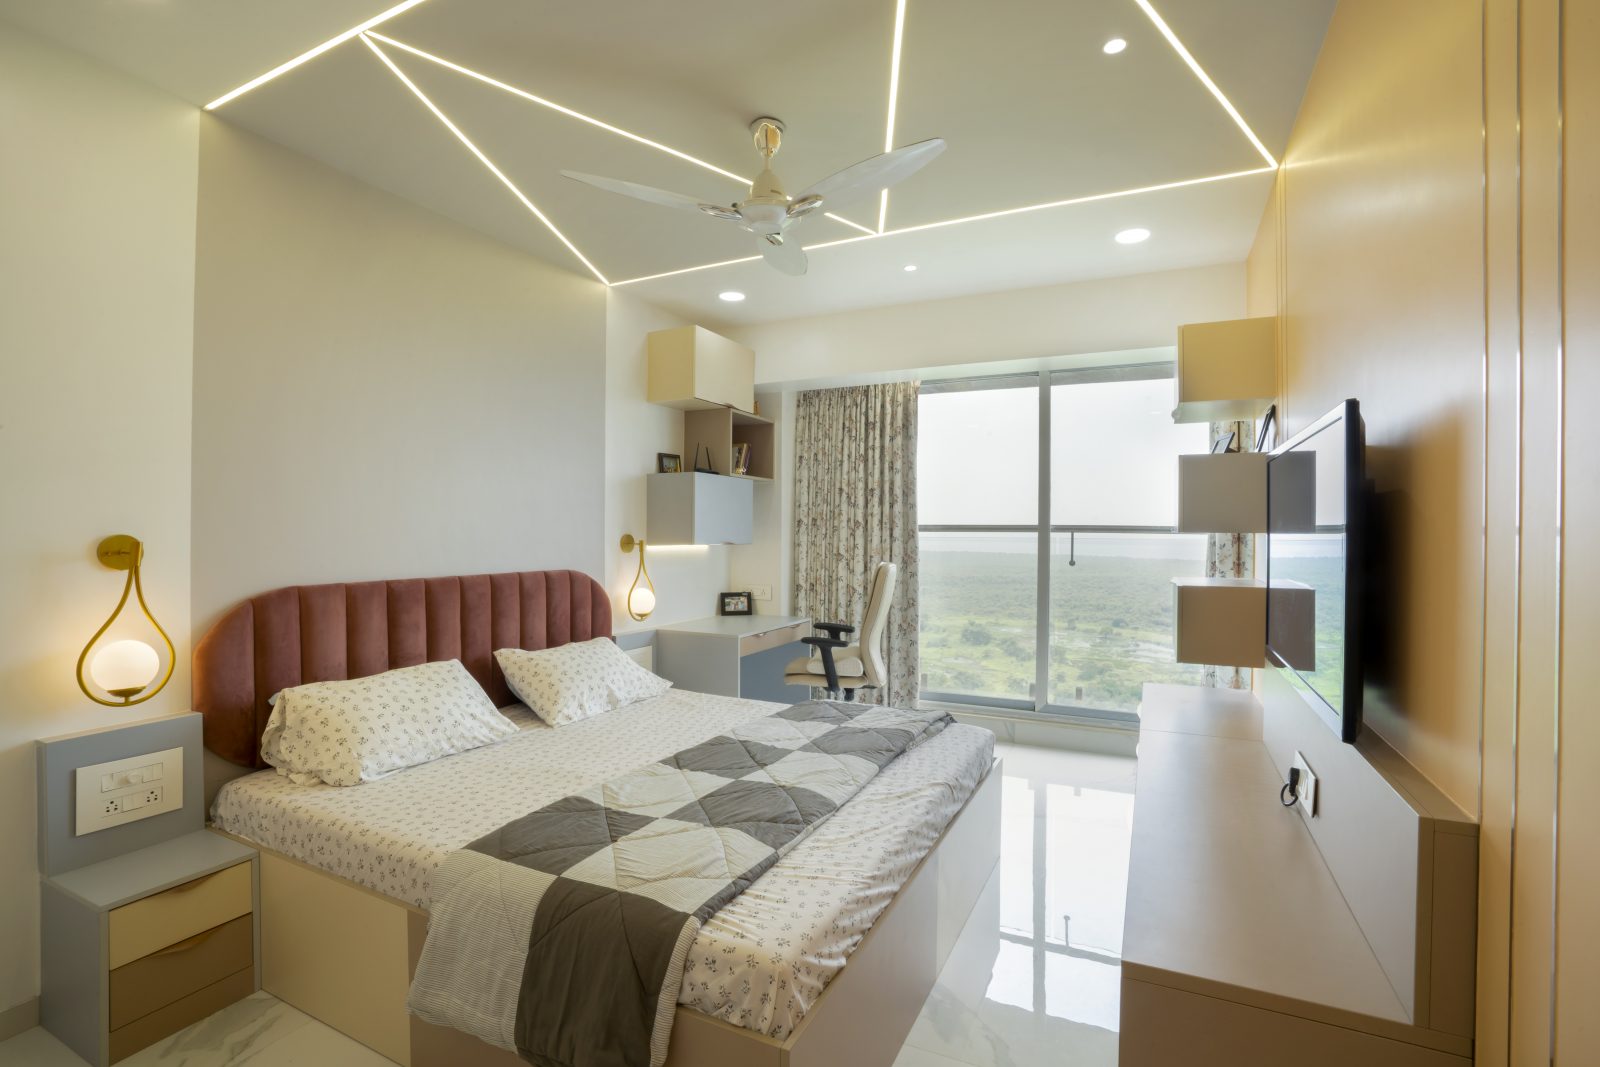 Exlusive bedroom interior design ideas